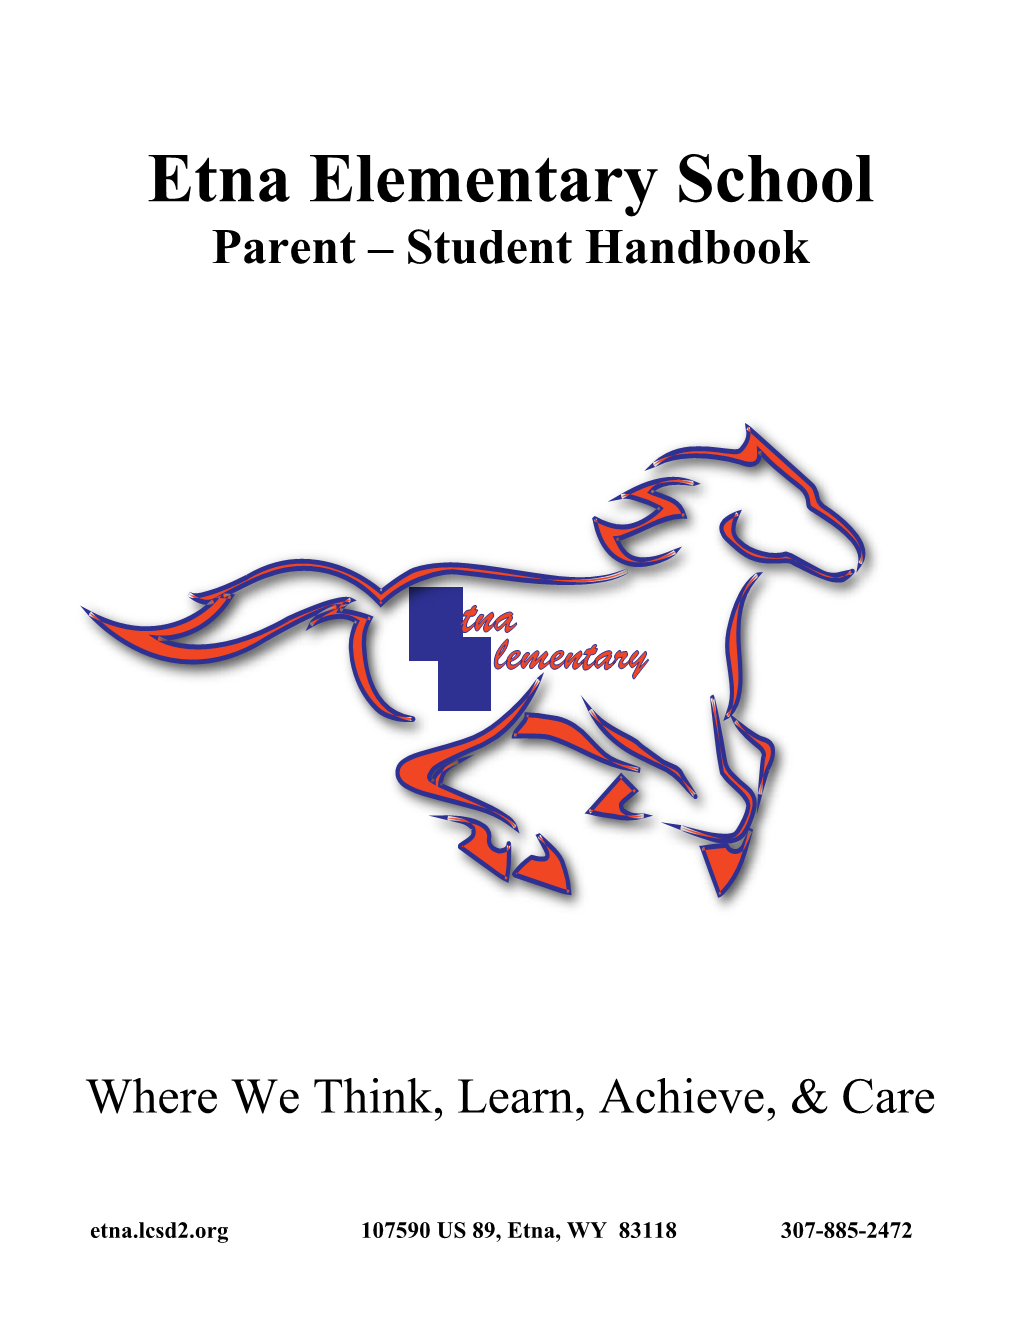 Etna Elementary Standards & Goals